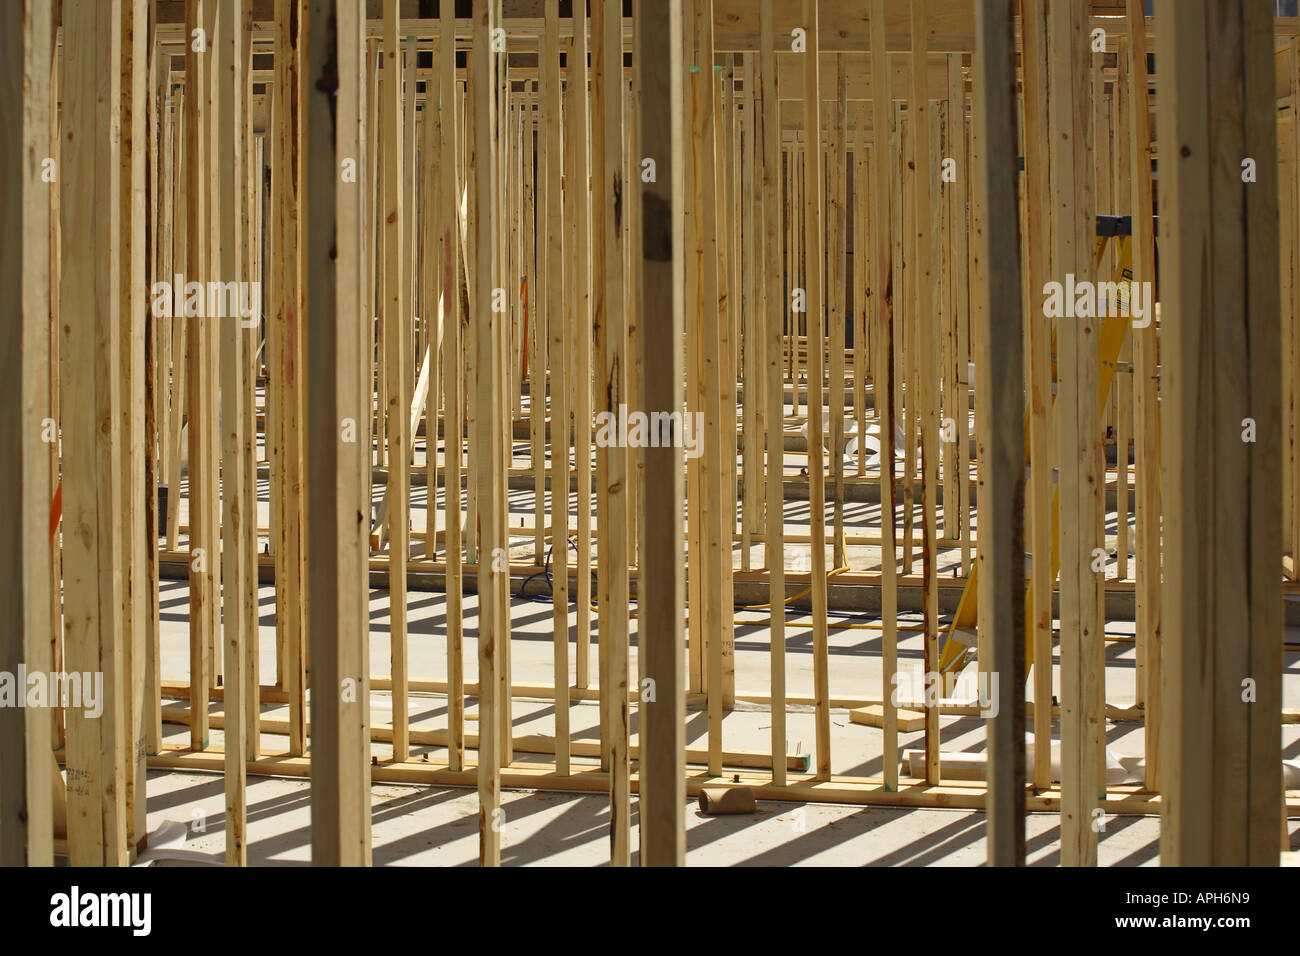 Construction site Stock Photo